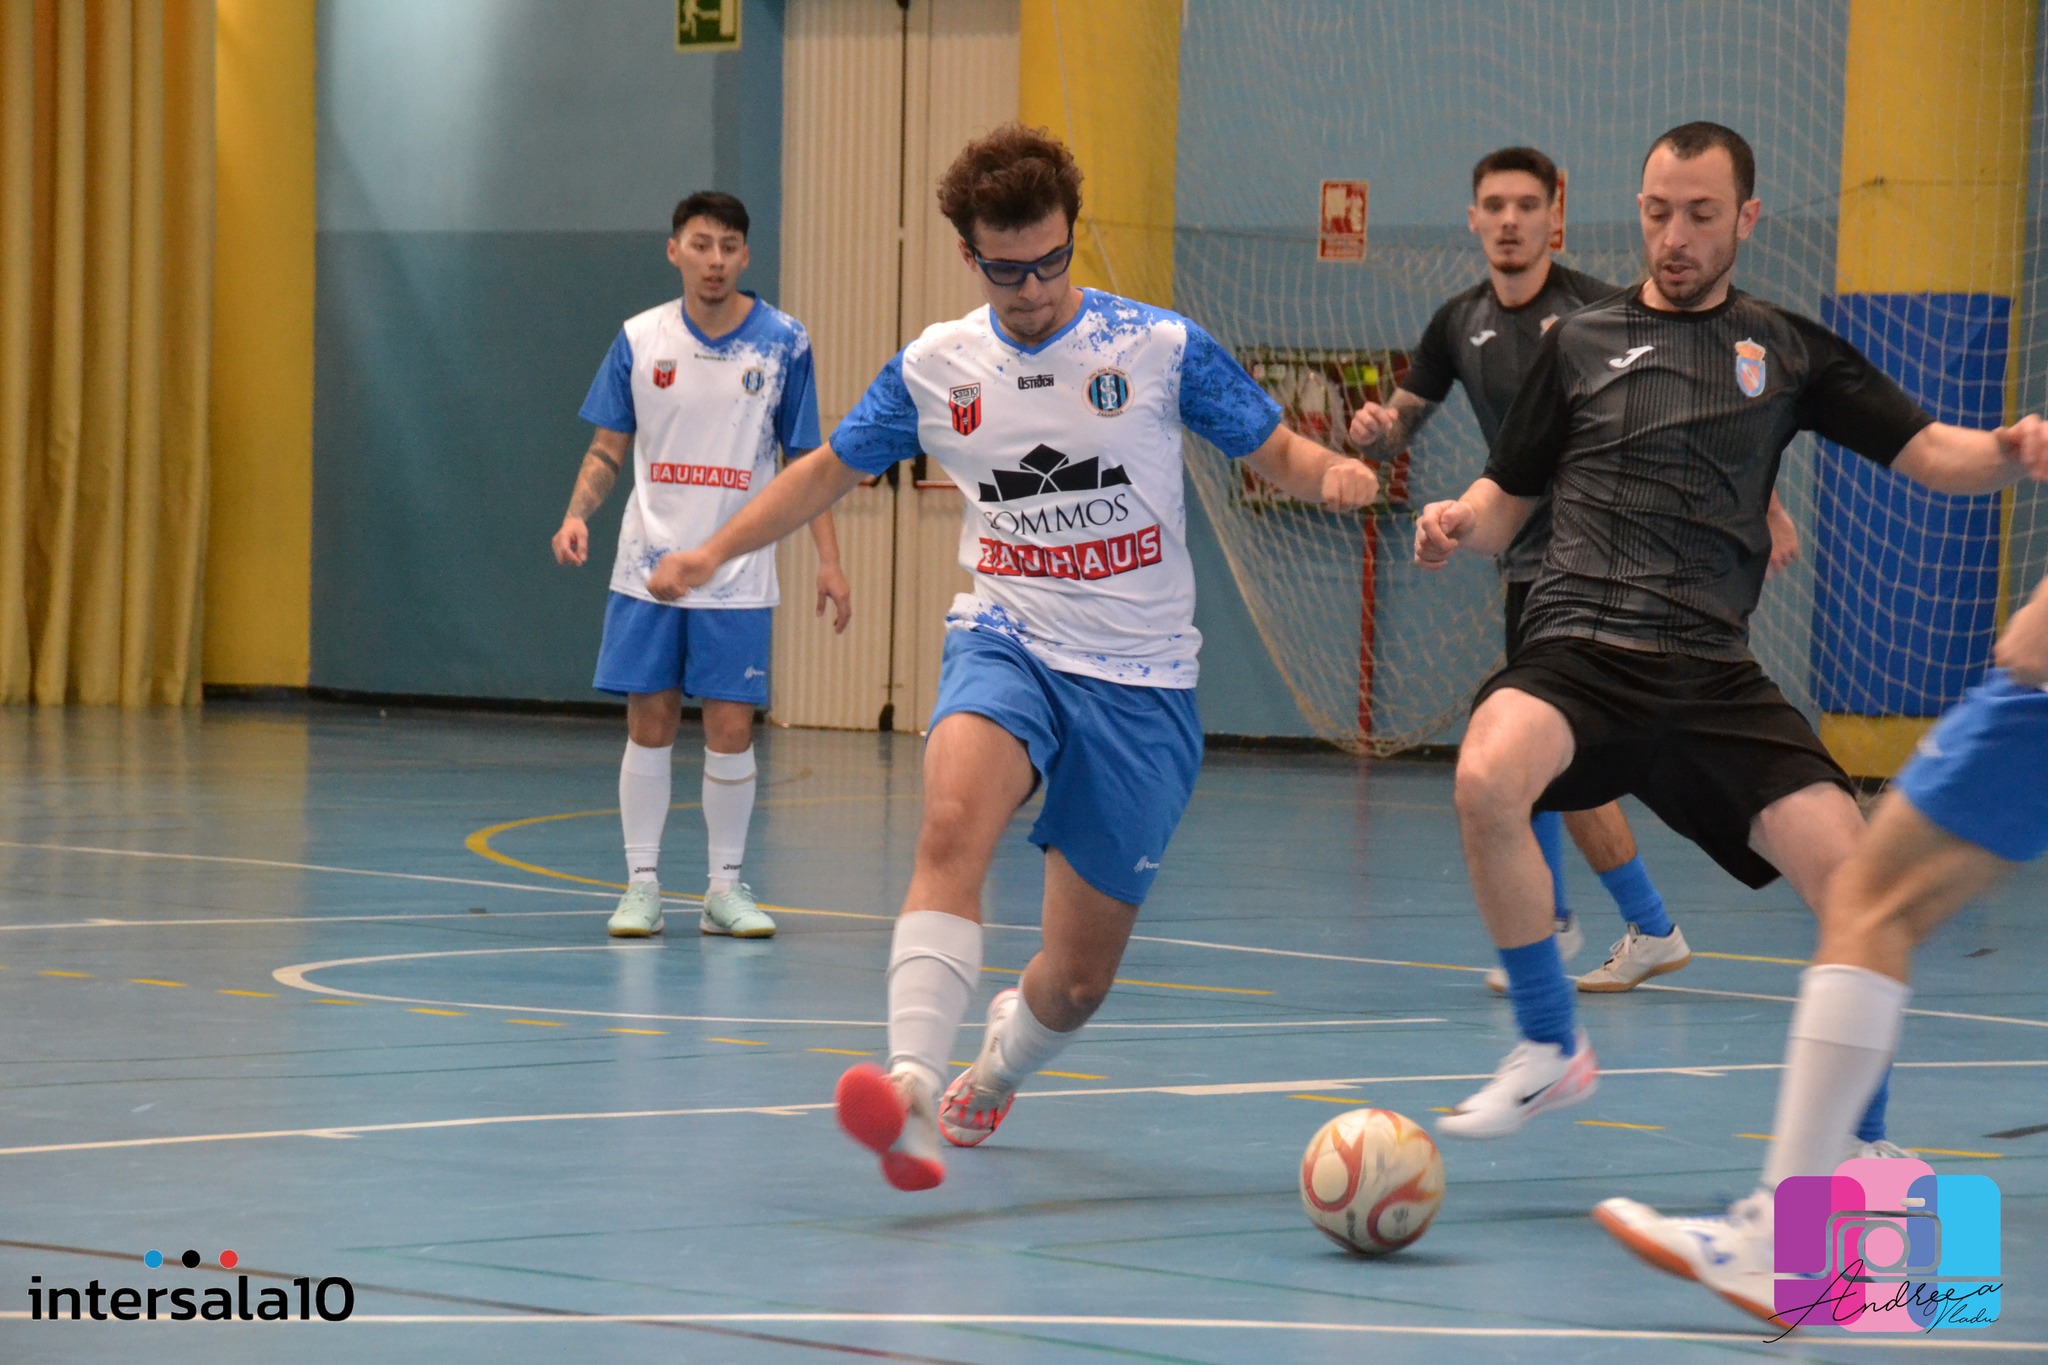 InterSala 10 Zaragoza (2º Senior) 3-4 Villafranca Futsal – Jornada 14